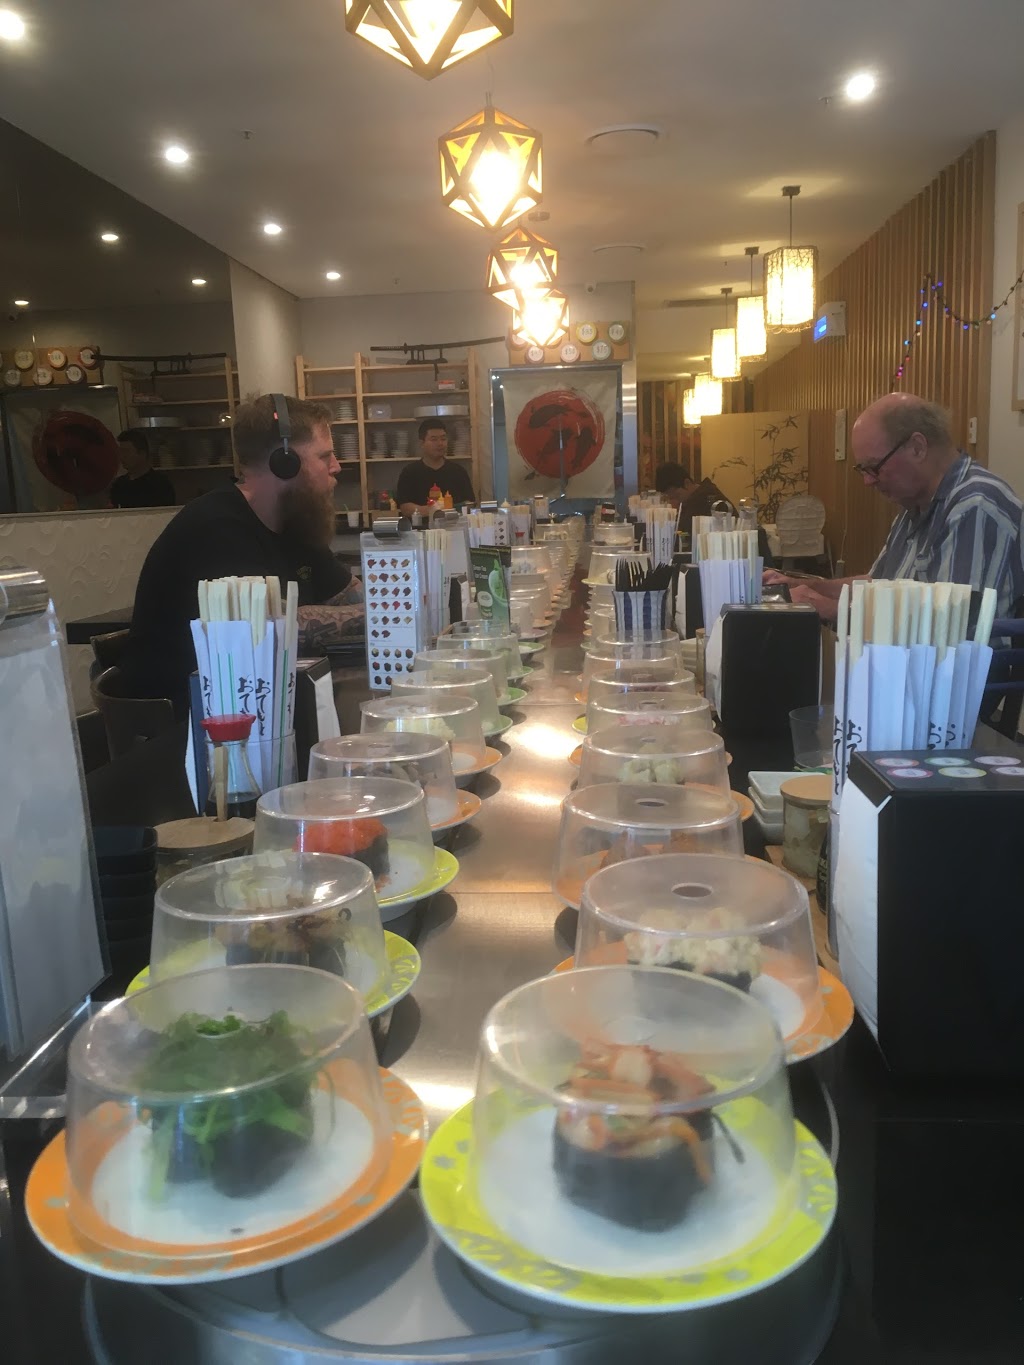 Sushi Topia | 157 Redfern St, Redfern NSW 2016, Australia | Phone: (02) 9699 5588